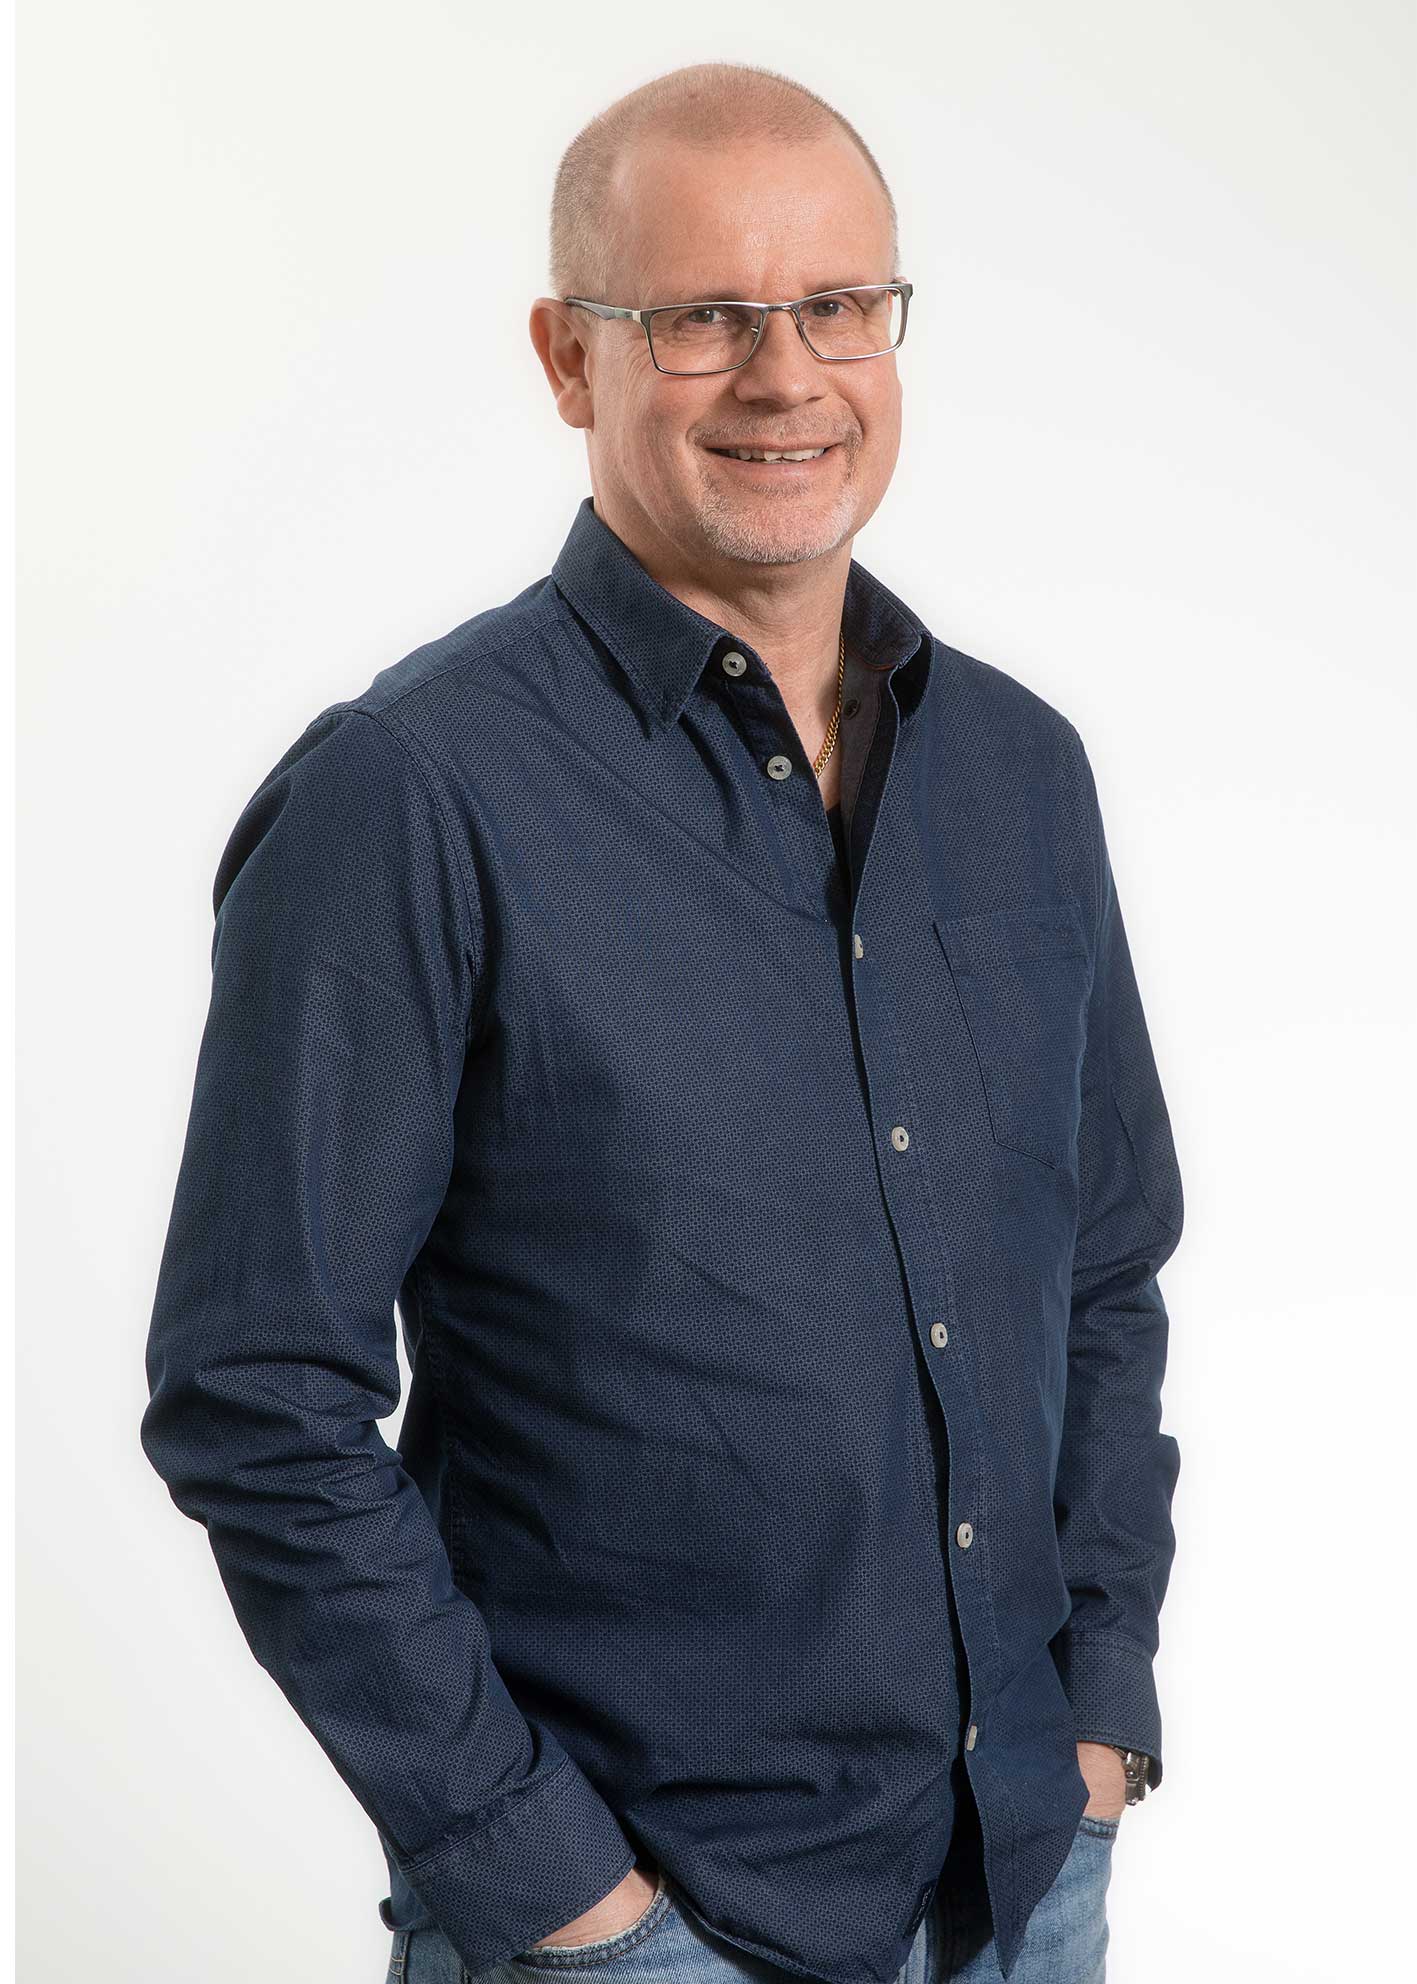 Christer Lundgren production manager